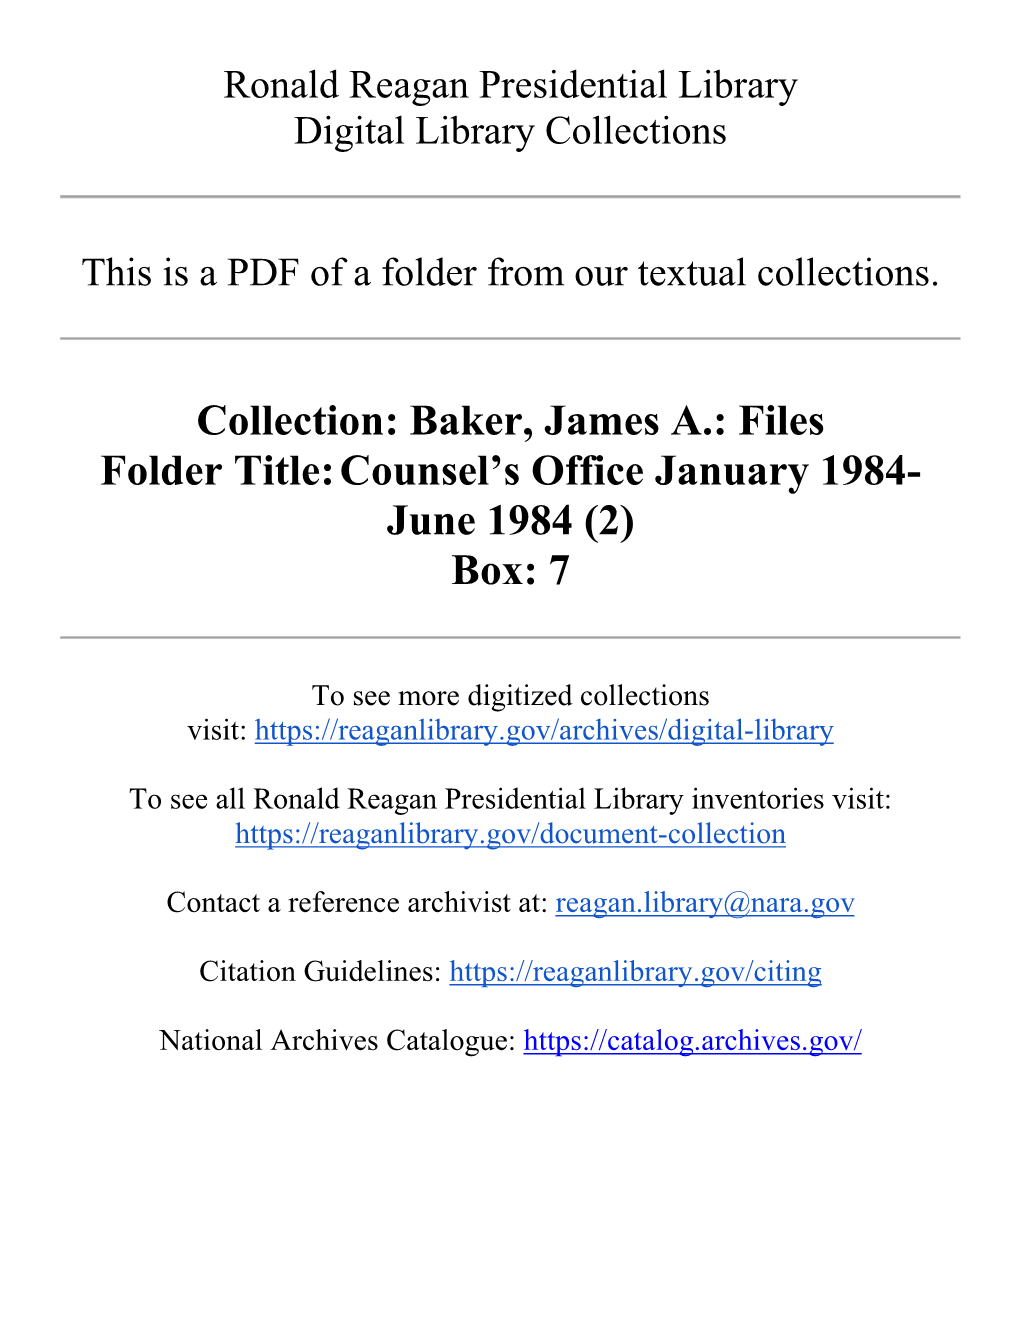 Baker, James A.: Files Folder Title:Counsel's Office January 1984